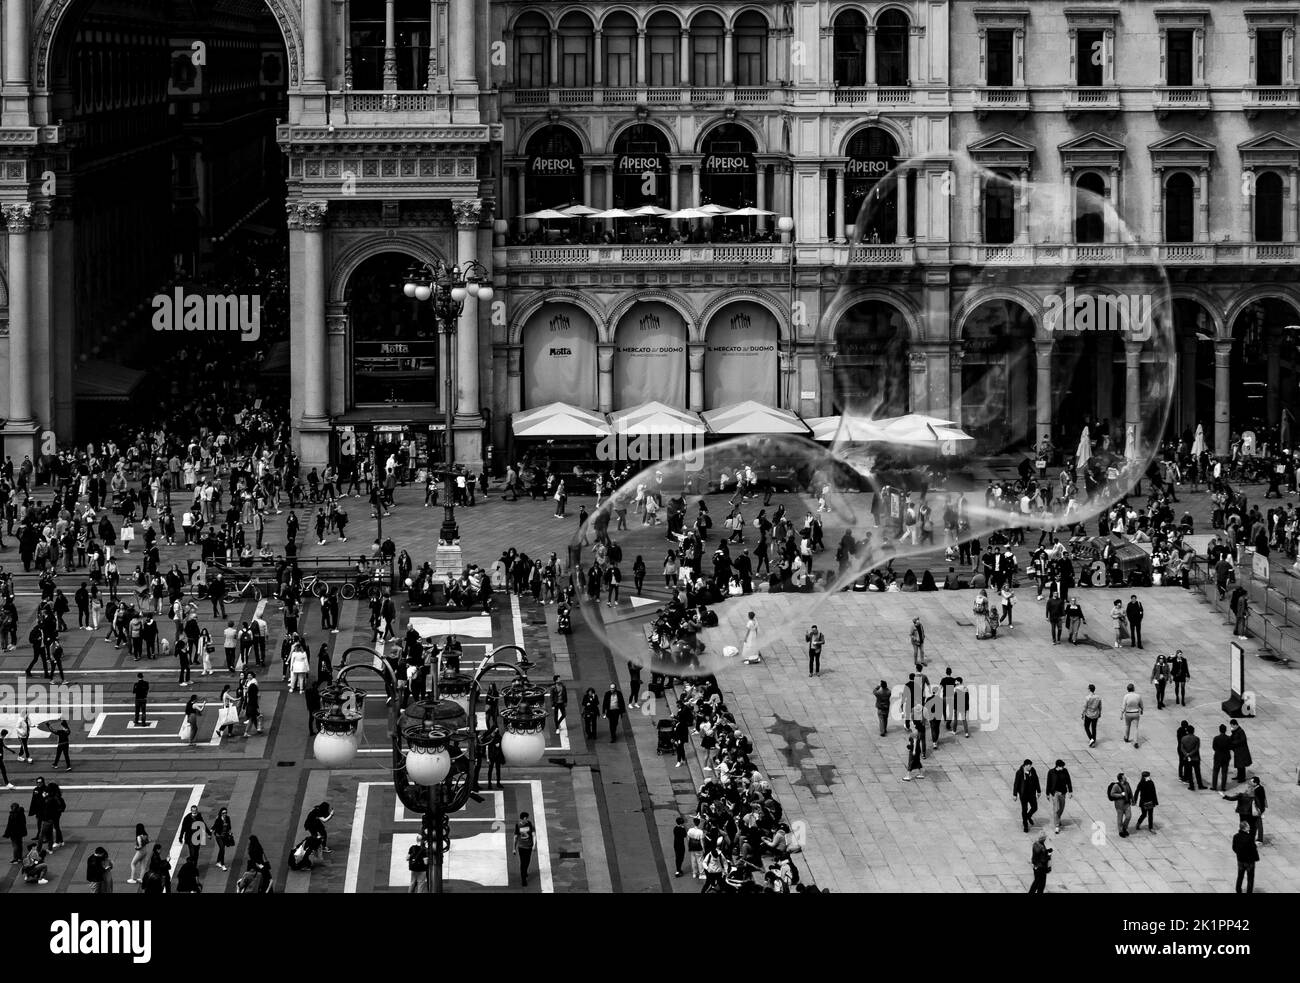 Vue aérienne en niveaux de gris de Milan, Italie, Piazza del Duomo, Galleria Vittorio Emanuele II Banque D'Images